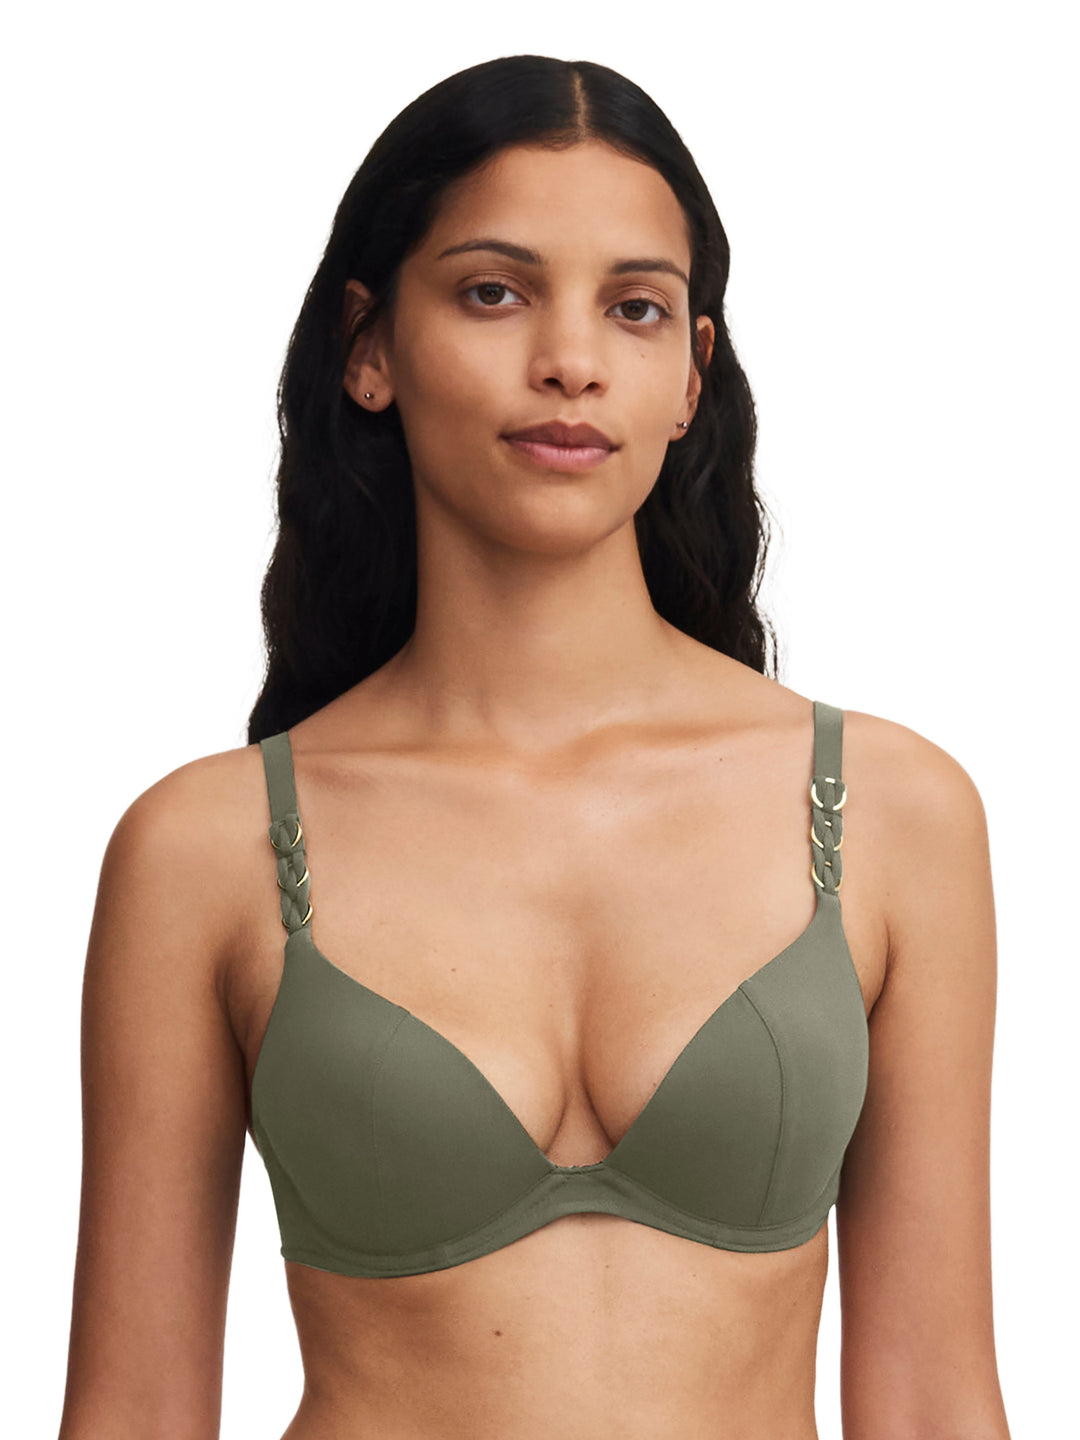 Chantelle Swimwear Emblem Covering Underwired Bikini - Khaki Green Full Cup Bikini Chantelle 